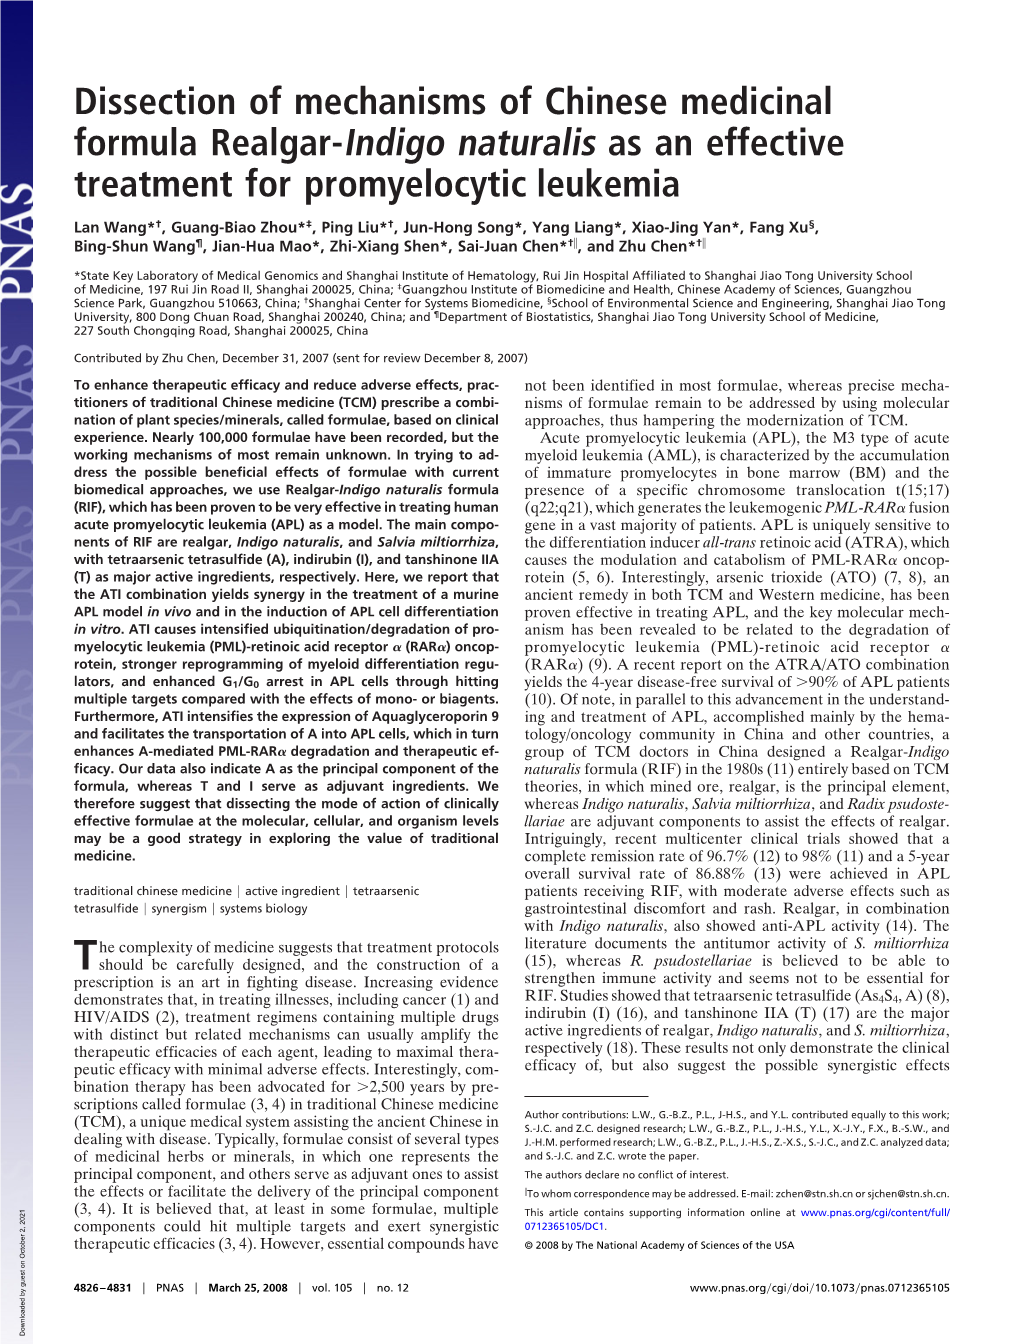 Dissection of Mechanisms of Chinese Medicinal Formula Realgar-Indigo Naturalis As an Effective Treatment for Promyelocytic Leukemia